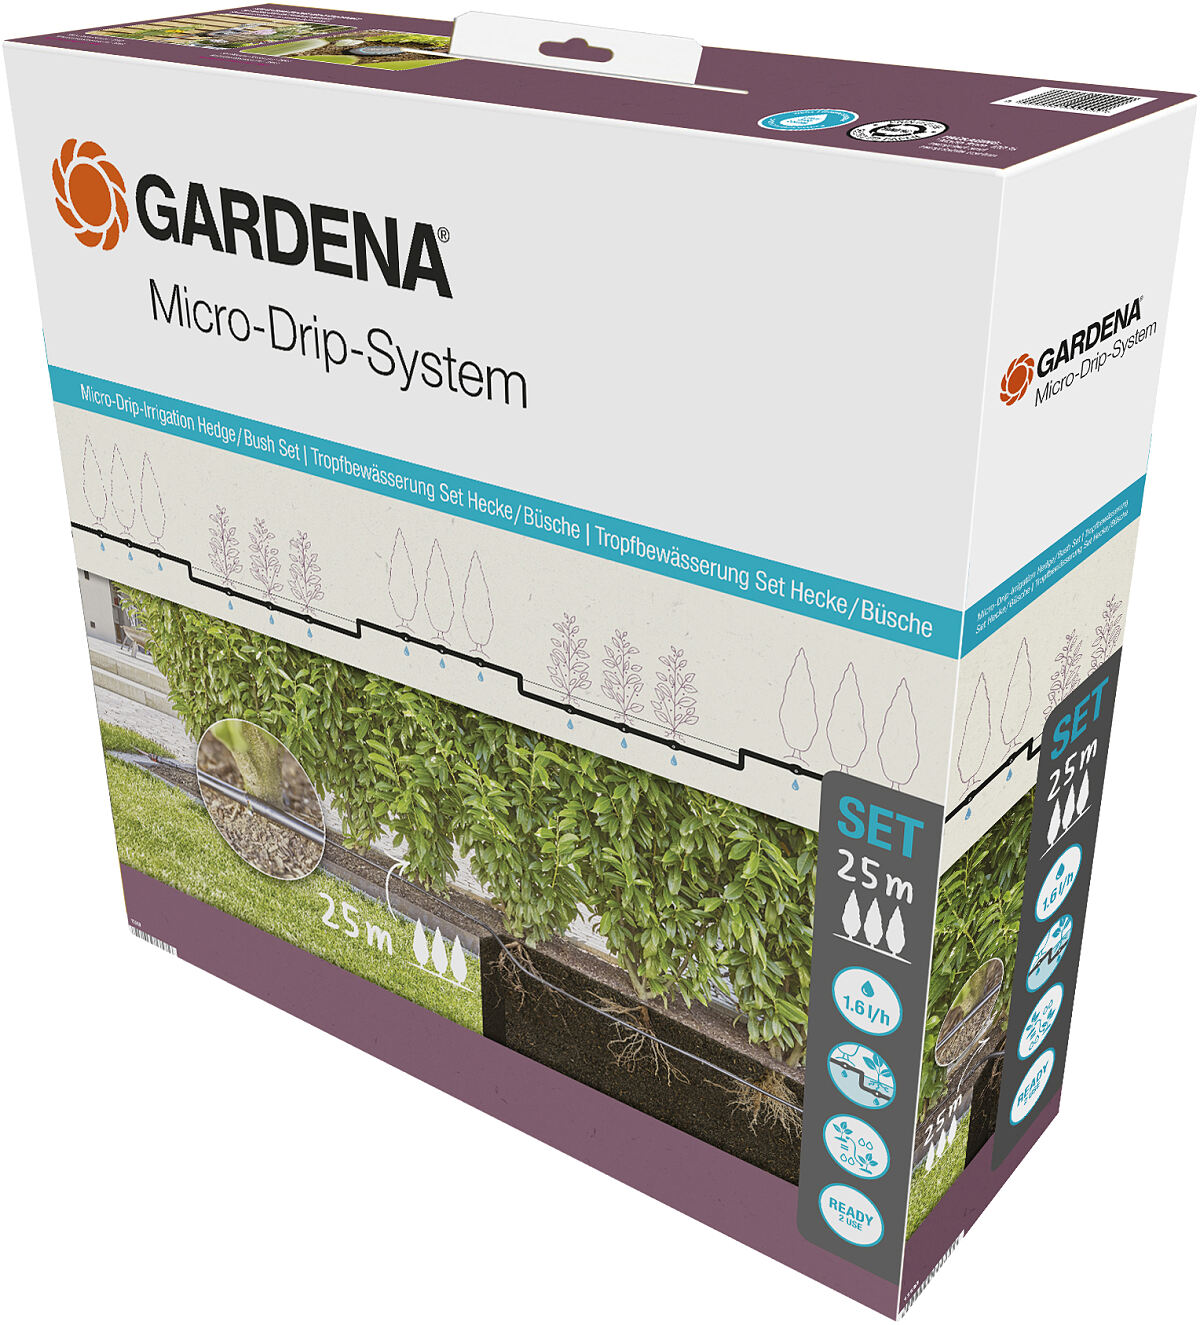 GARDENA Micro-Drip-Irrigation HedgeBush Set (25 m)